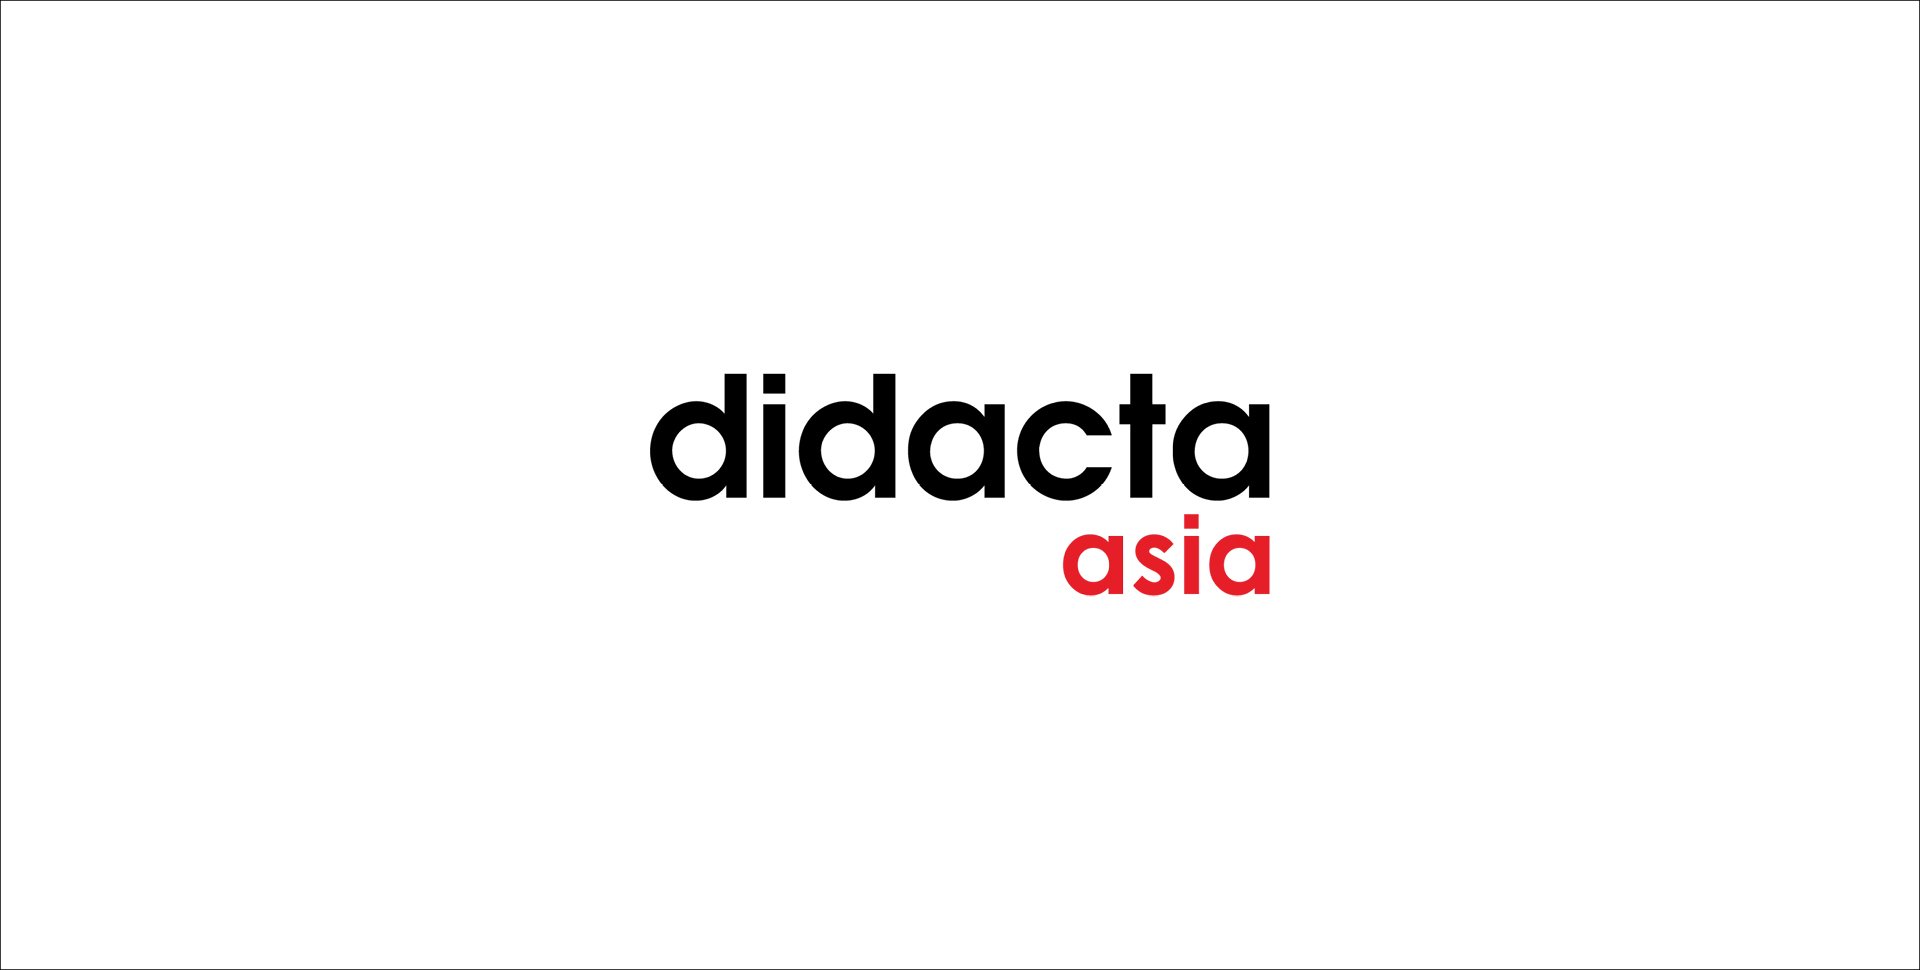 Logo der didacta asia